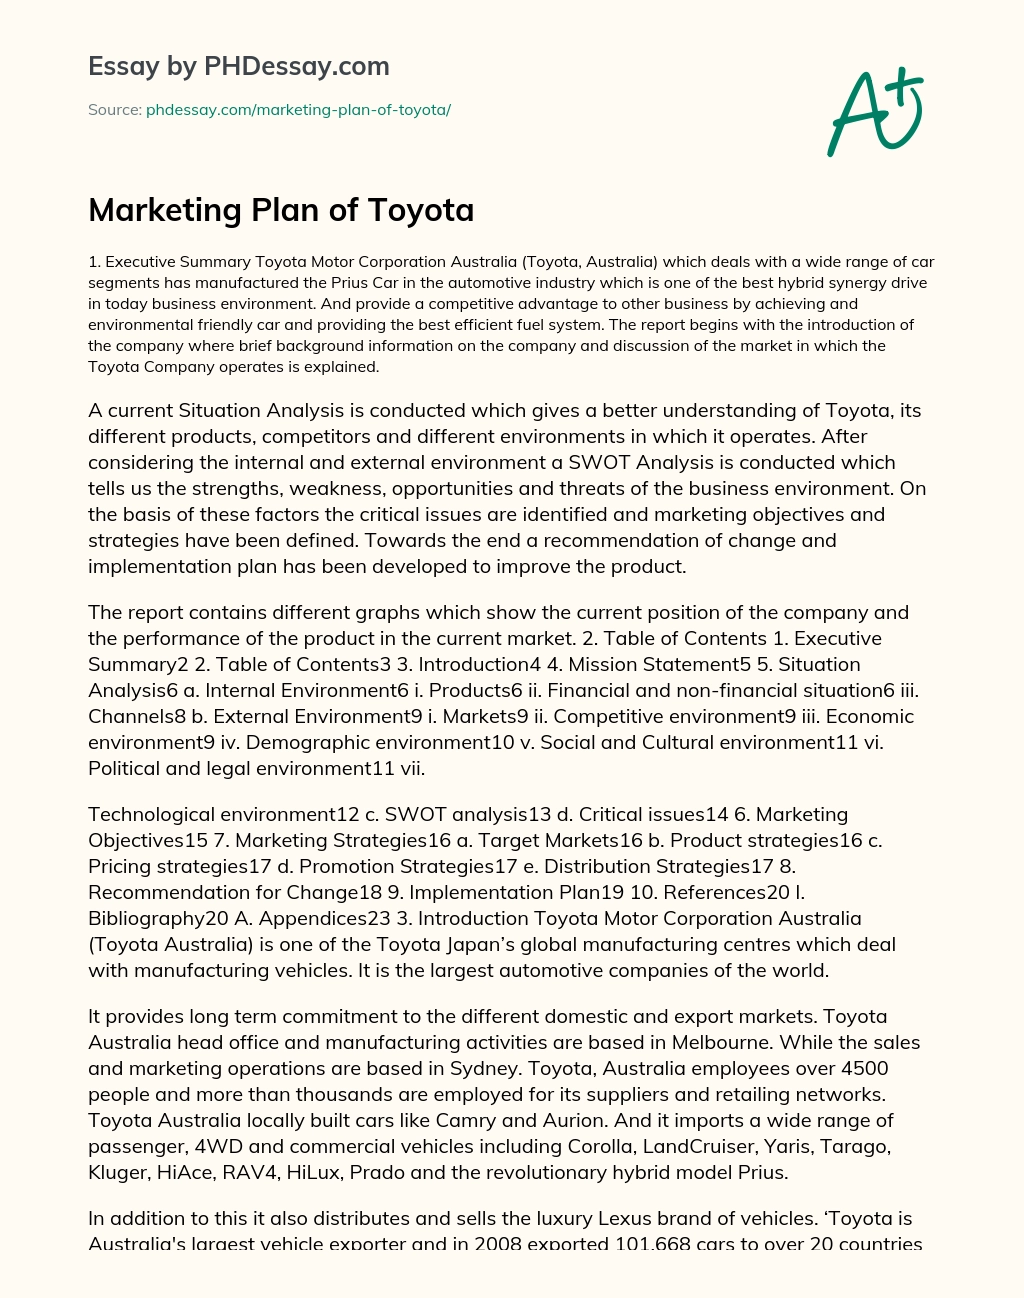 Marketing Plan of Toyota essay